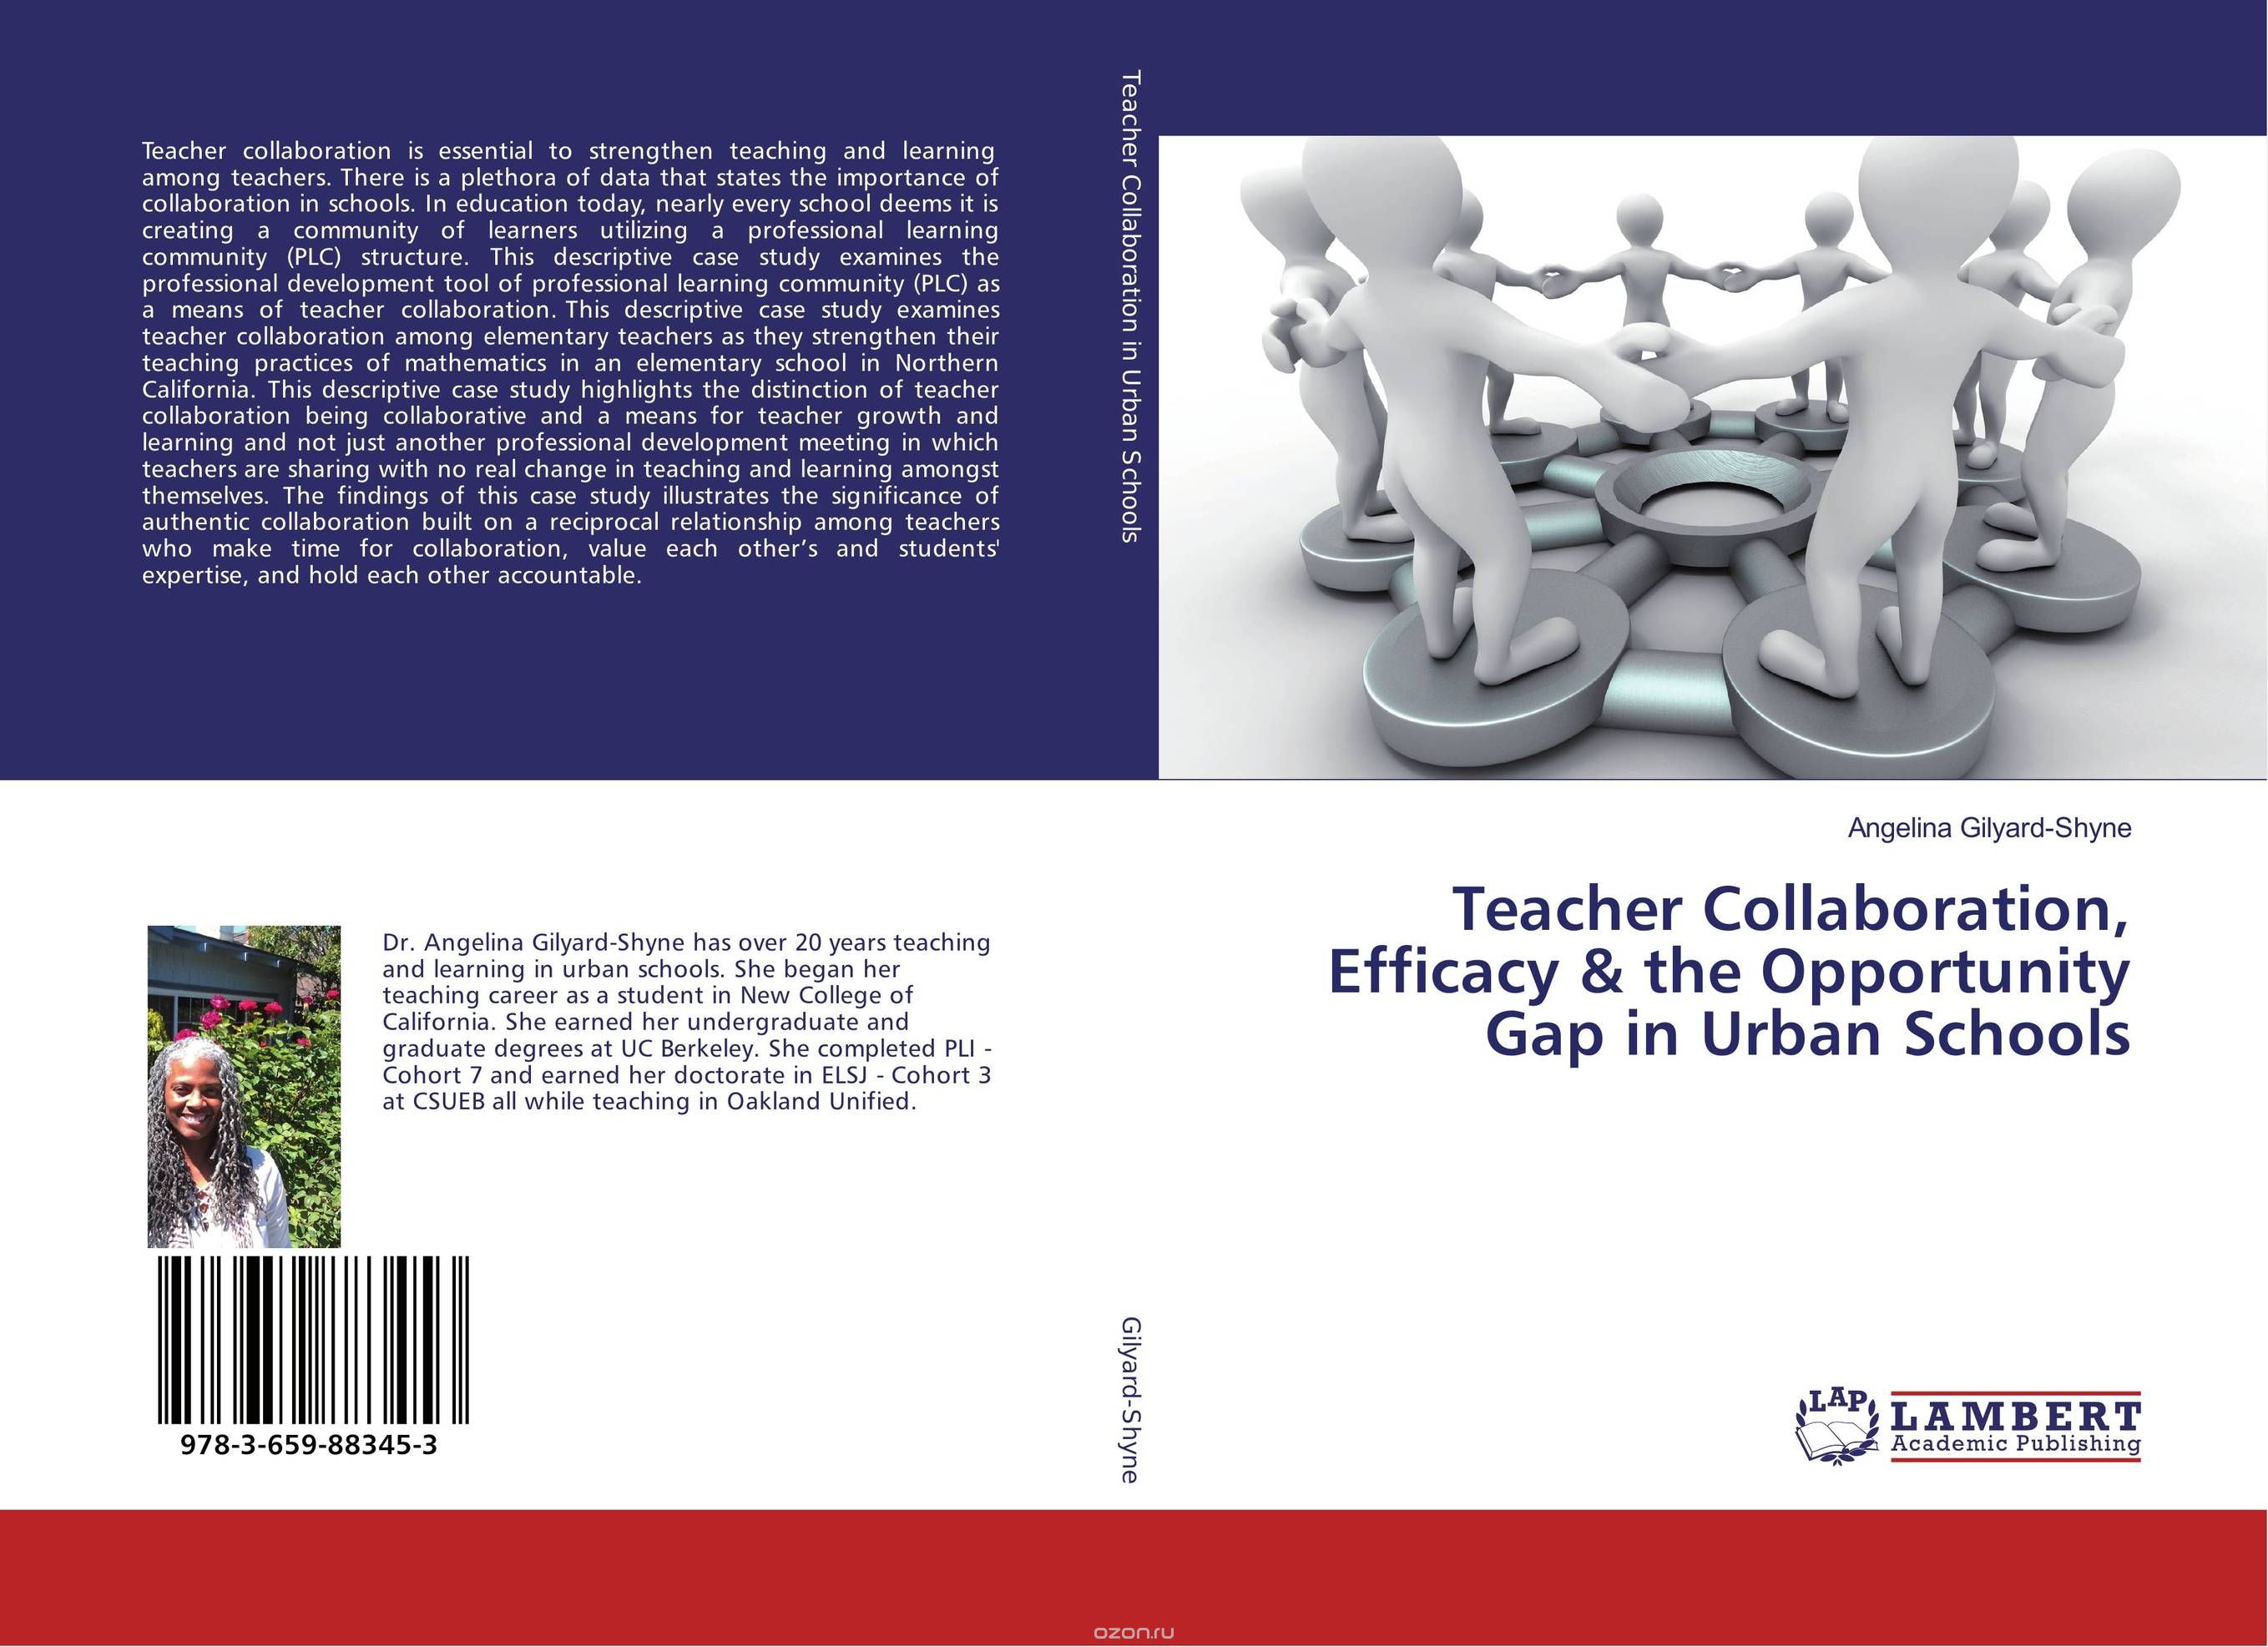 Teacher Collaboration, Efficacy & the Opportunity Gap in Urban Schools